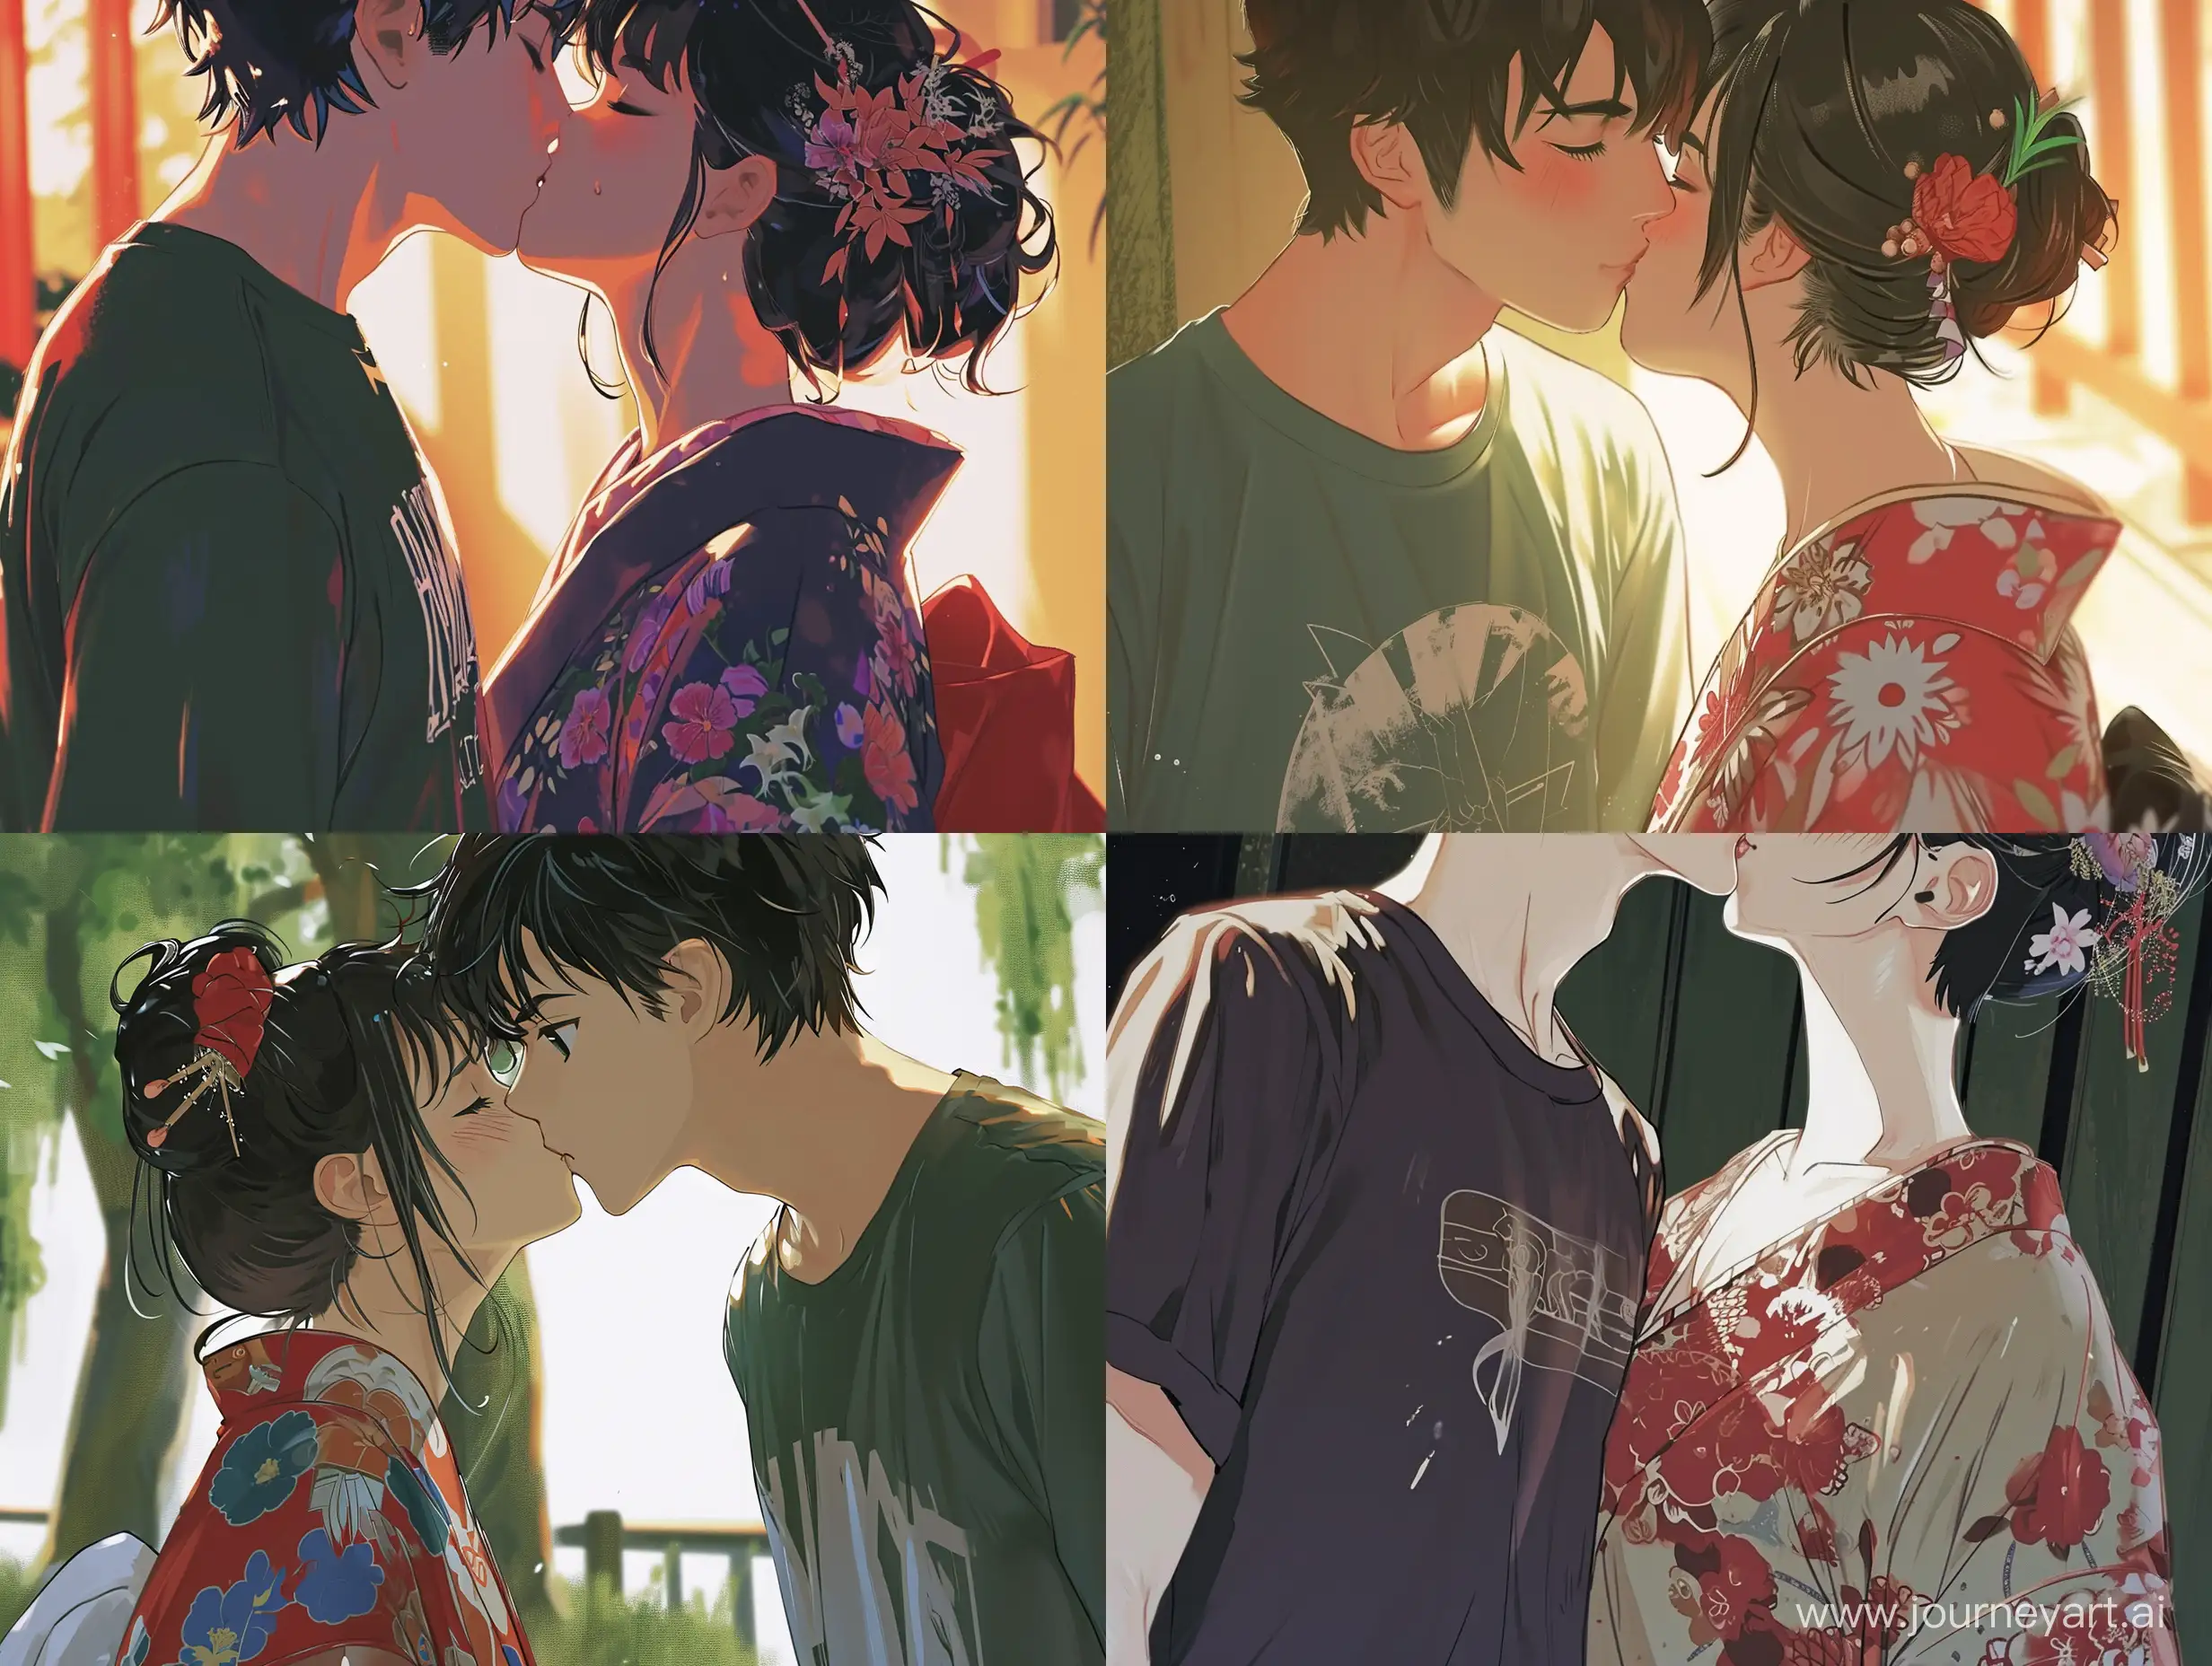 Romantic-Anime-Kiss-Intimate-Moment-of-TShirt-Clad-Man-and-KimonoWearing-Woman